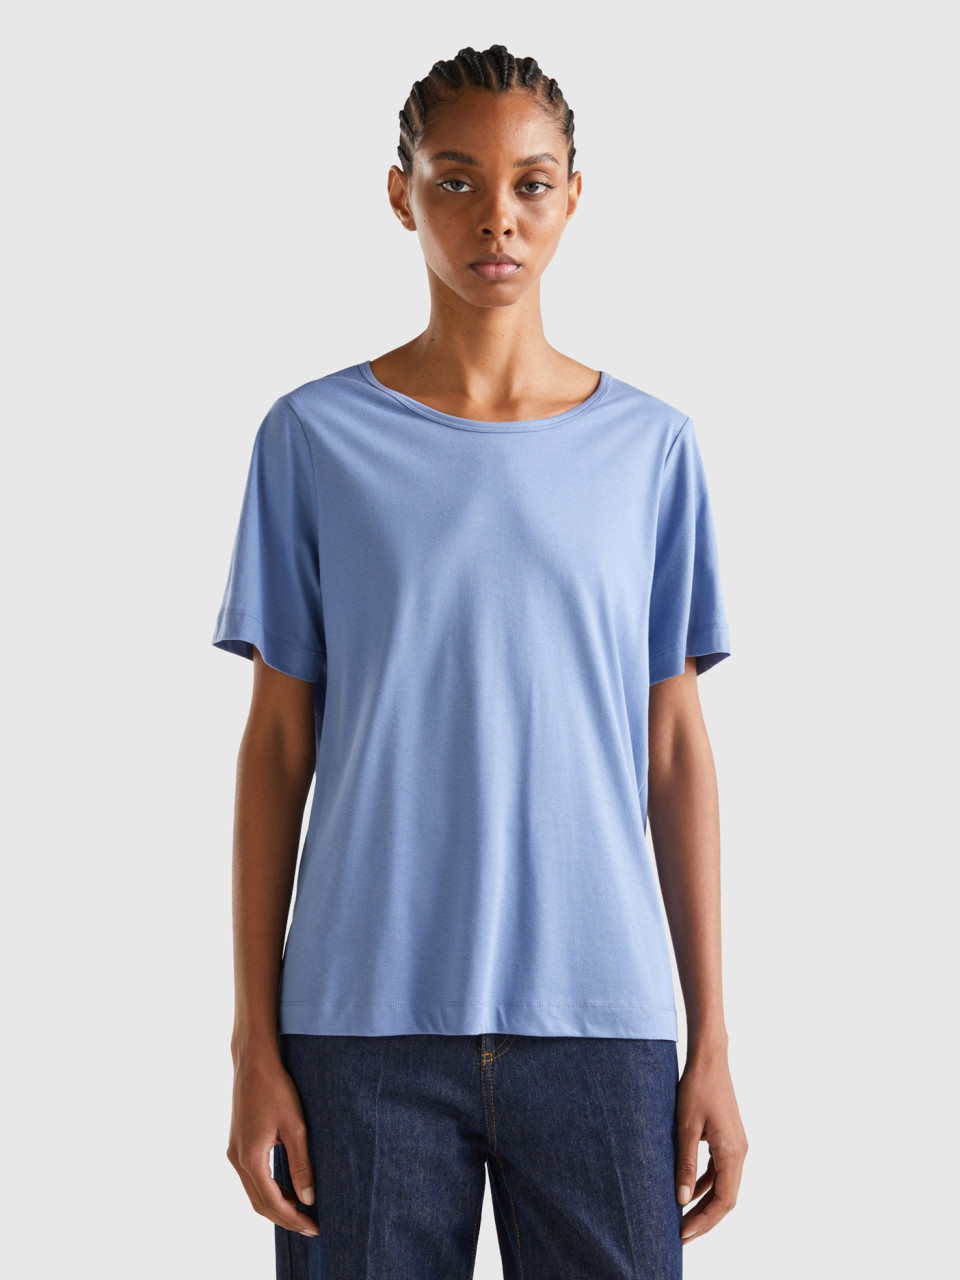 Benetton, T-shirt In Himmelblau Mit Kurzen Ärmeln, Azurblau, female